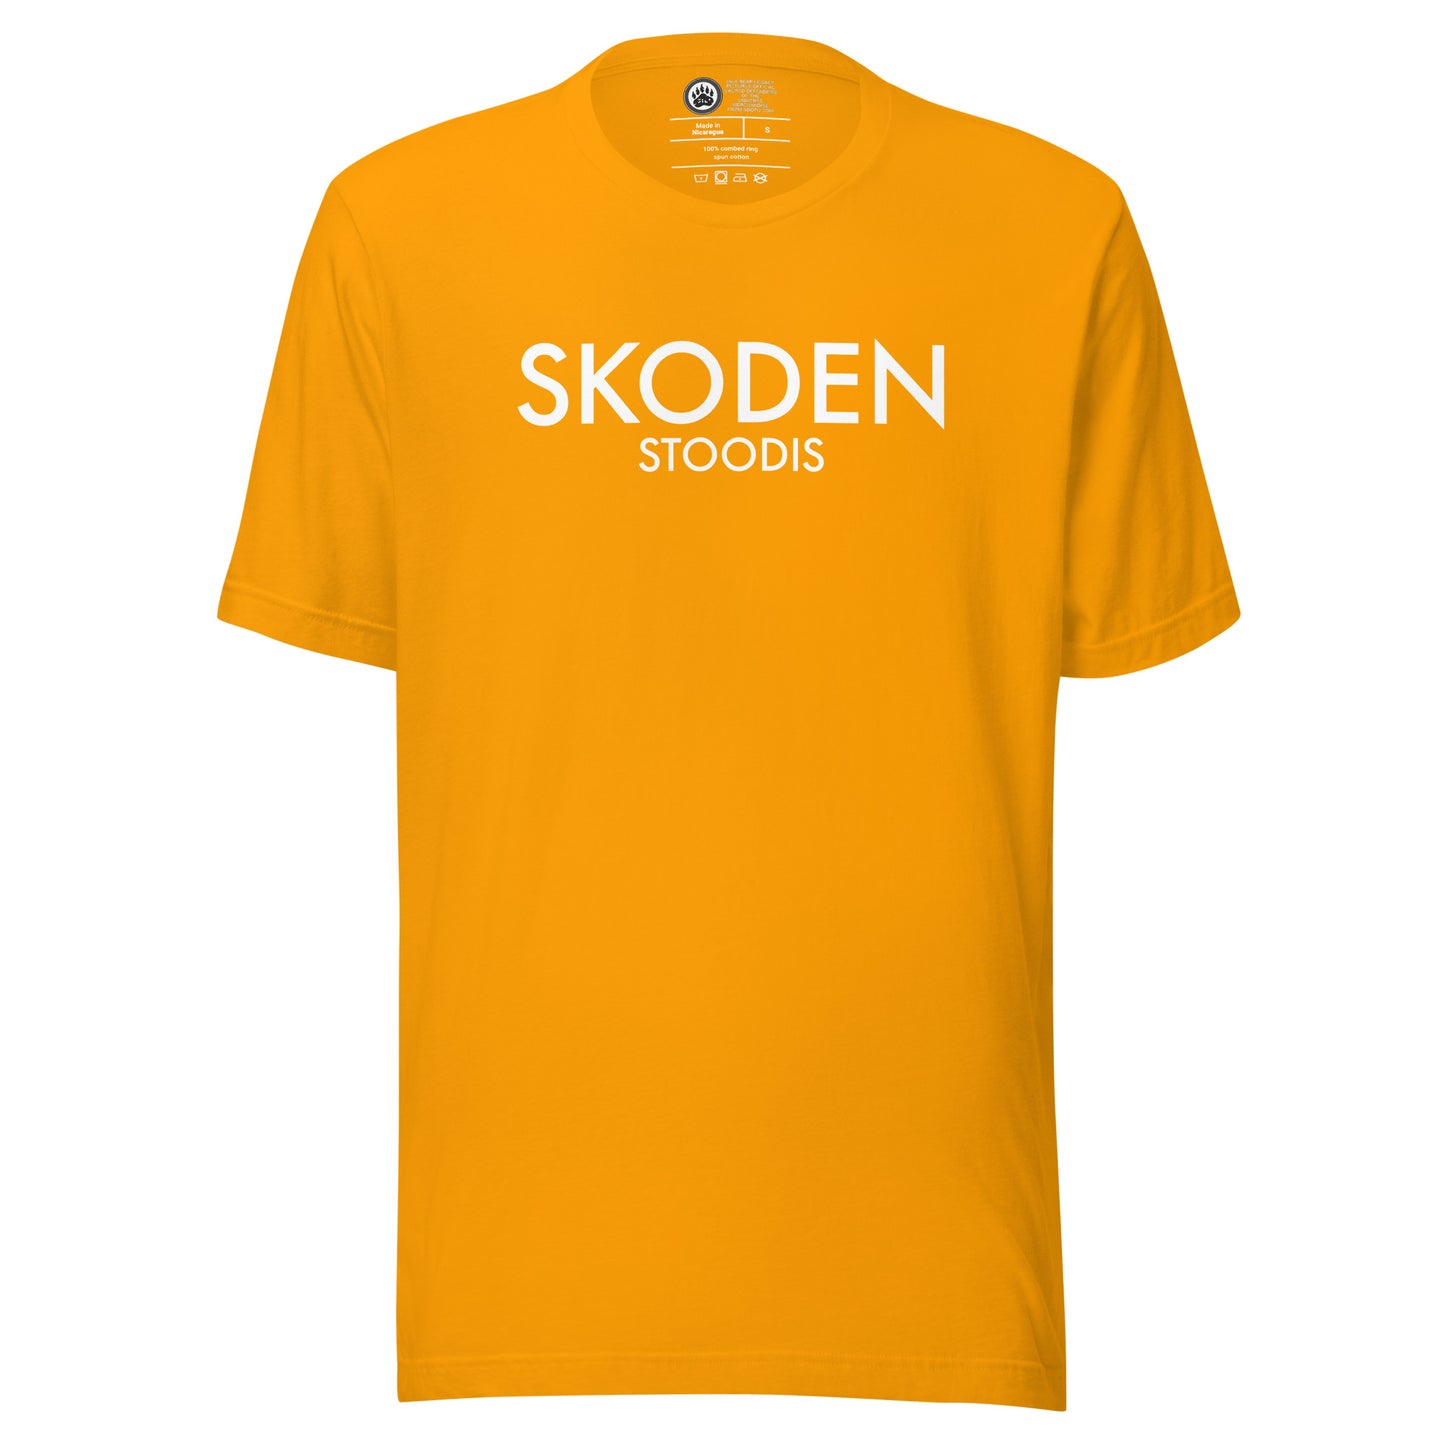 Unisex Skoden Stoodis t-shirt